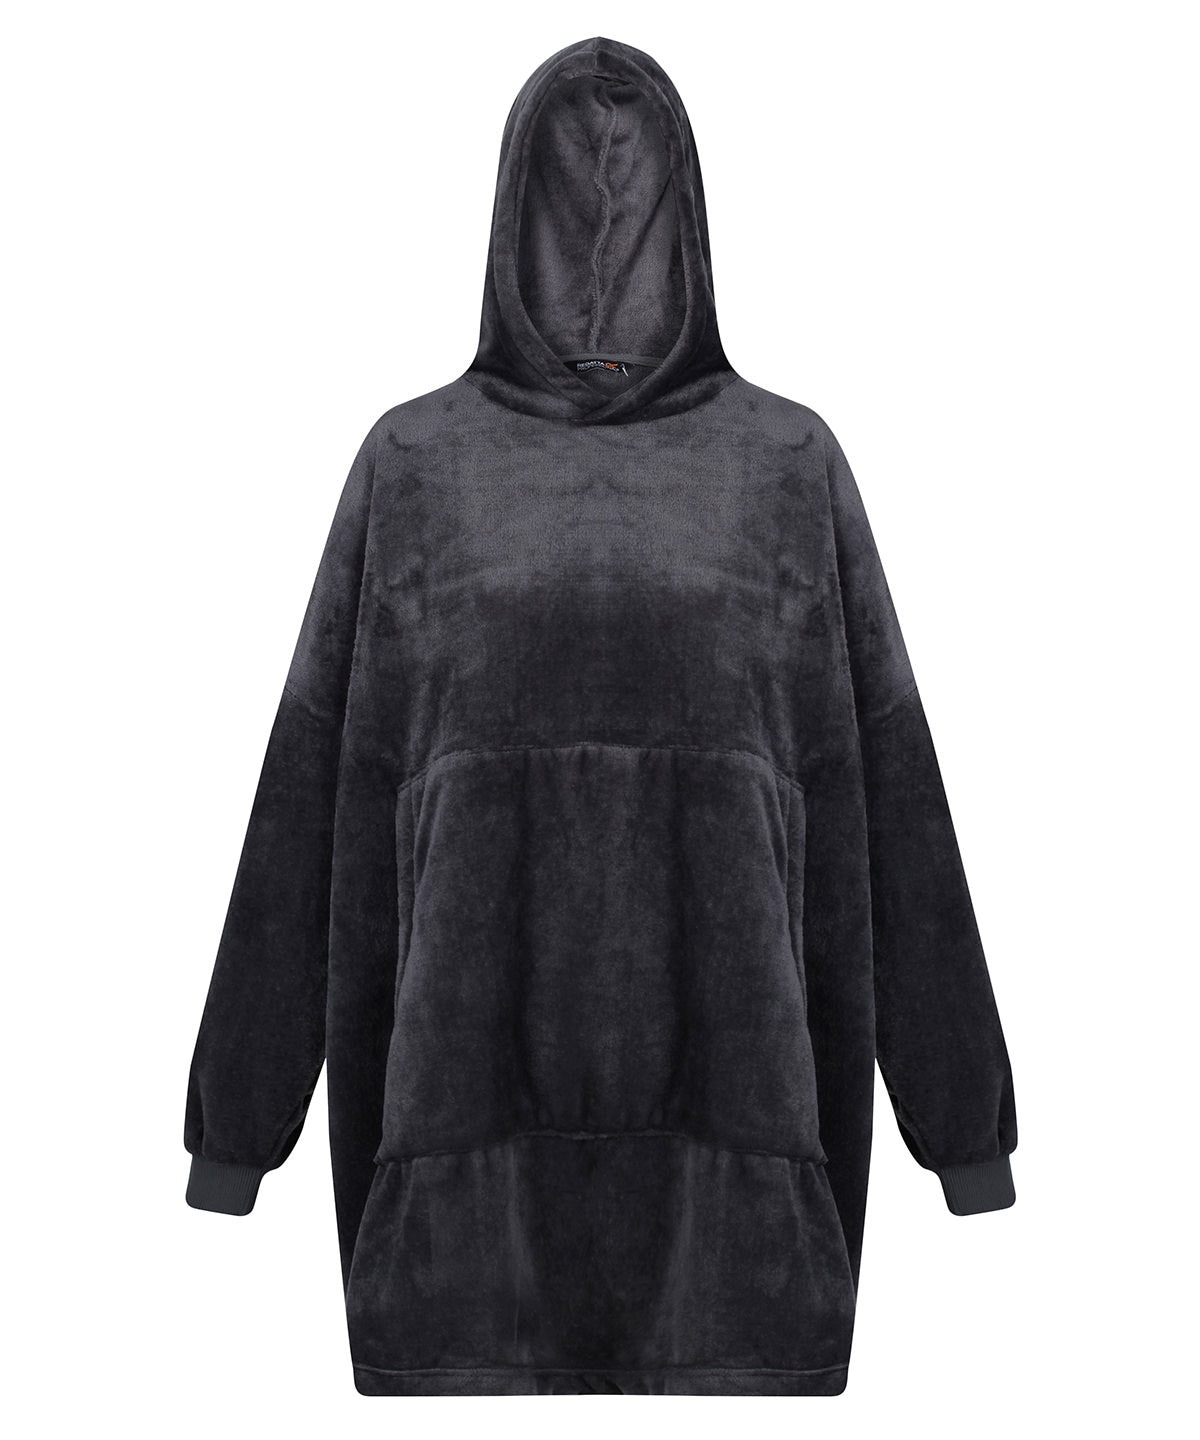 Hettupeysur - Snuggler Oversized Fleece Hoodie